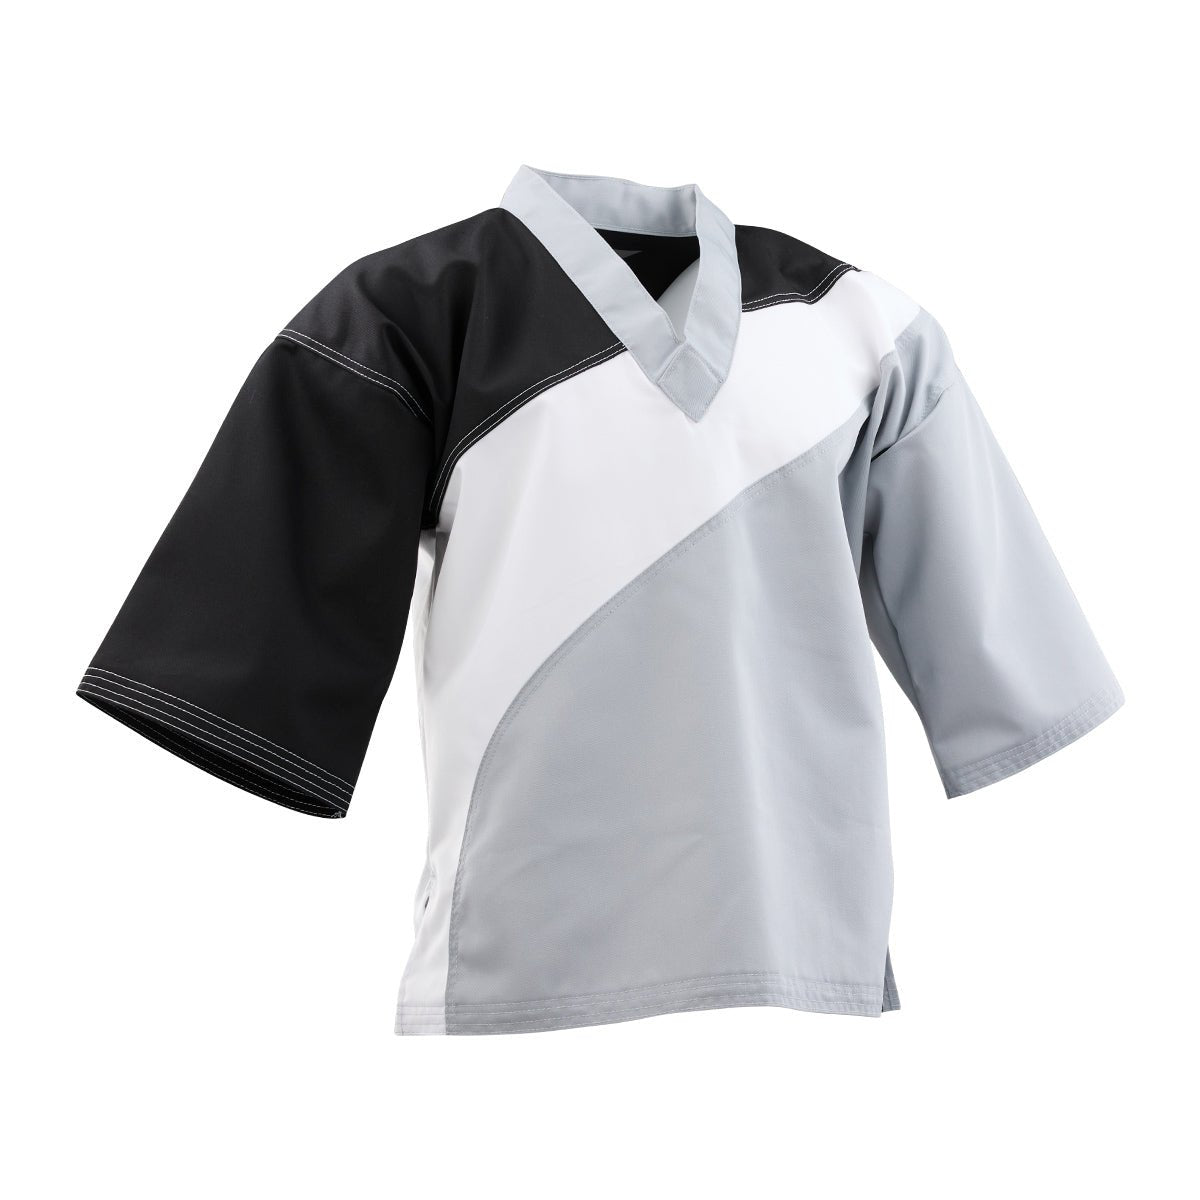 Tri-Color Diagonal Program Uniform Top White Black Grey